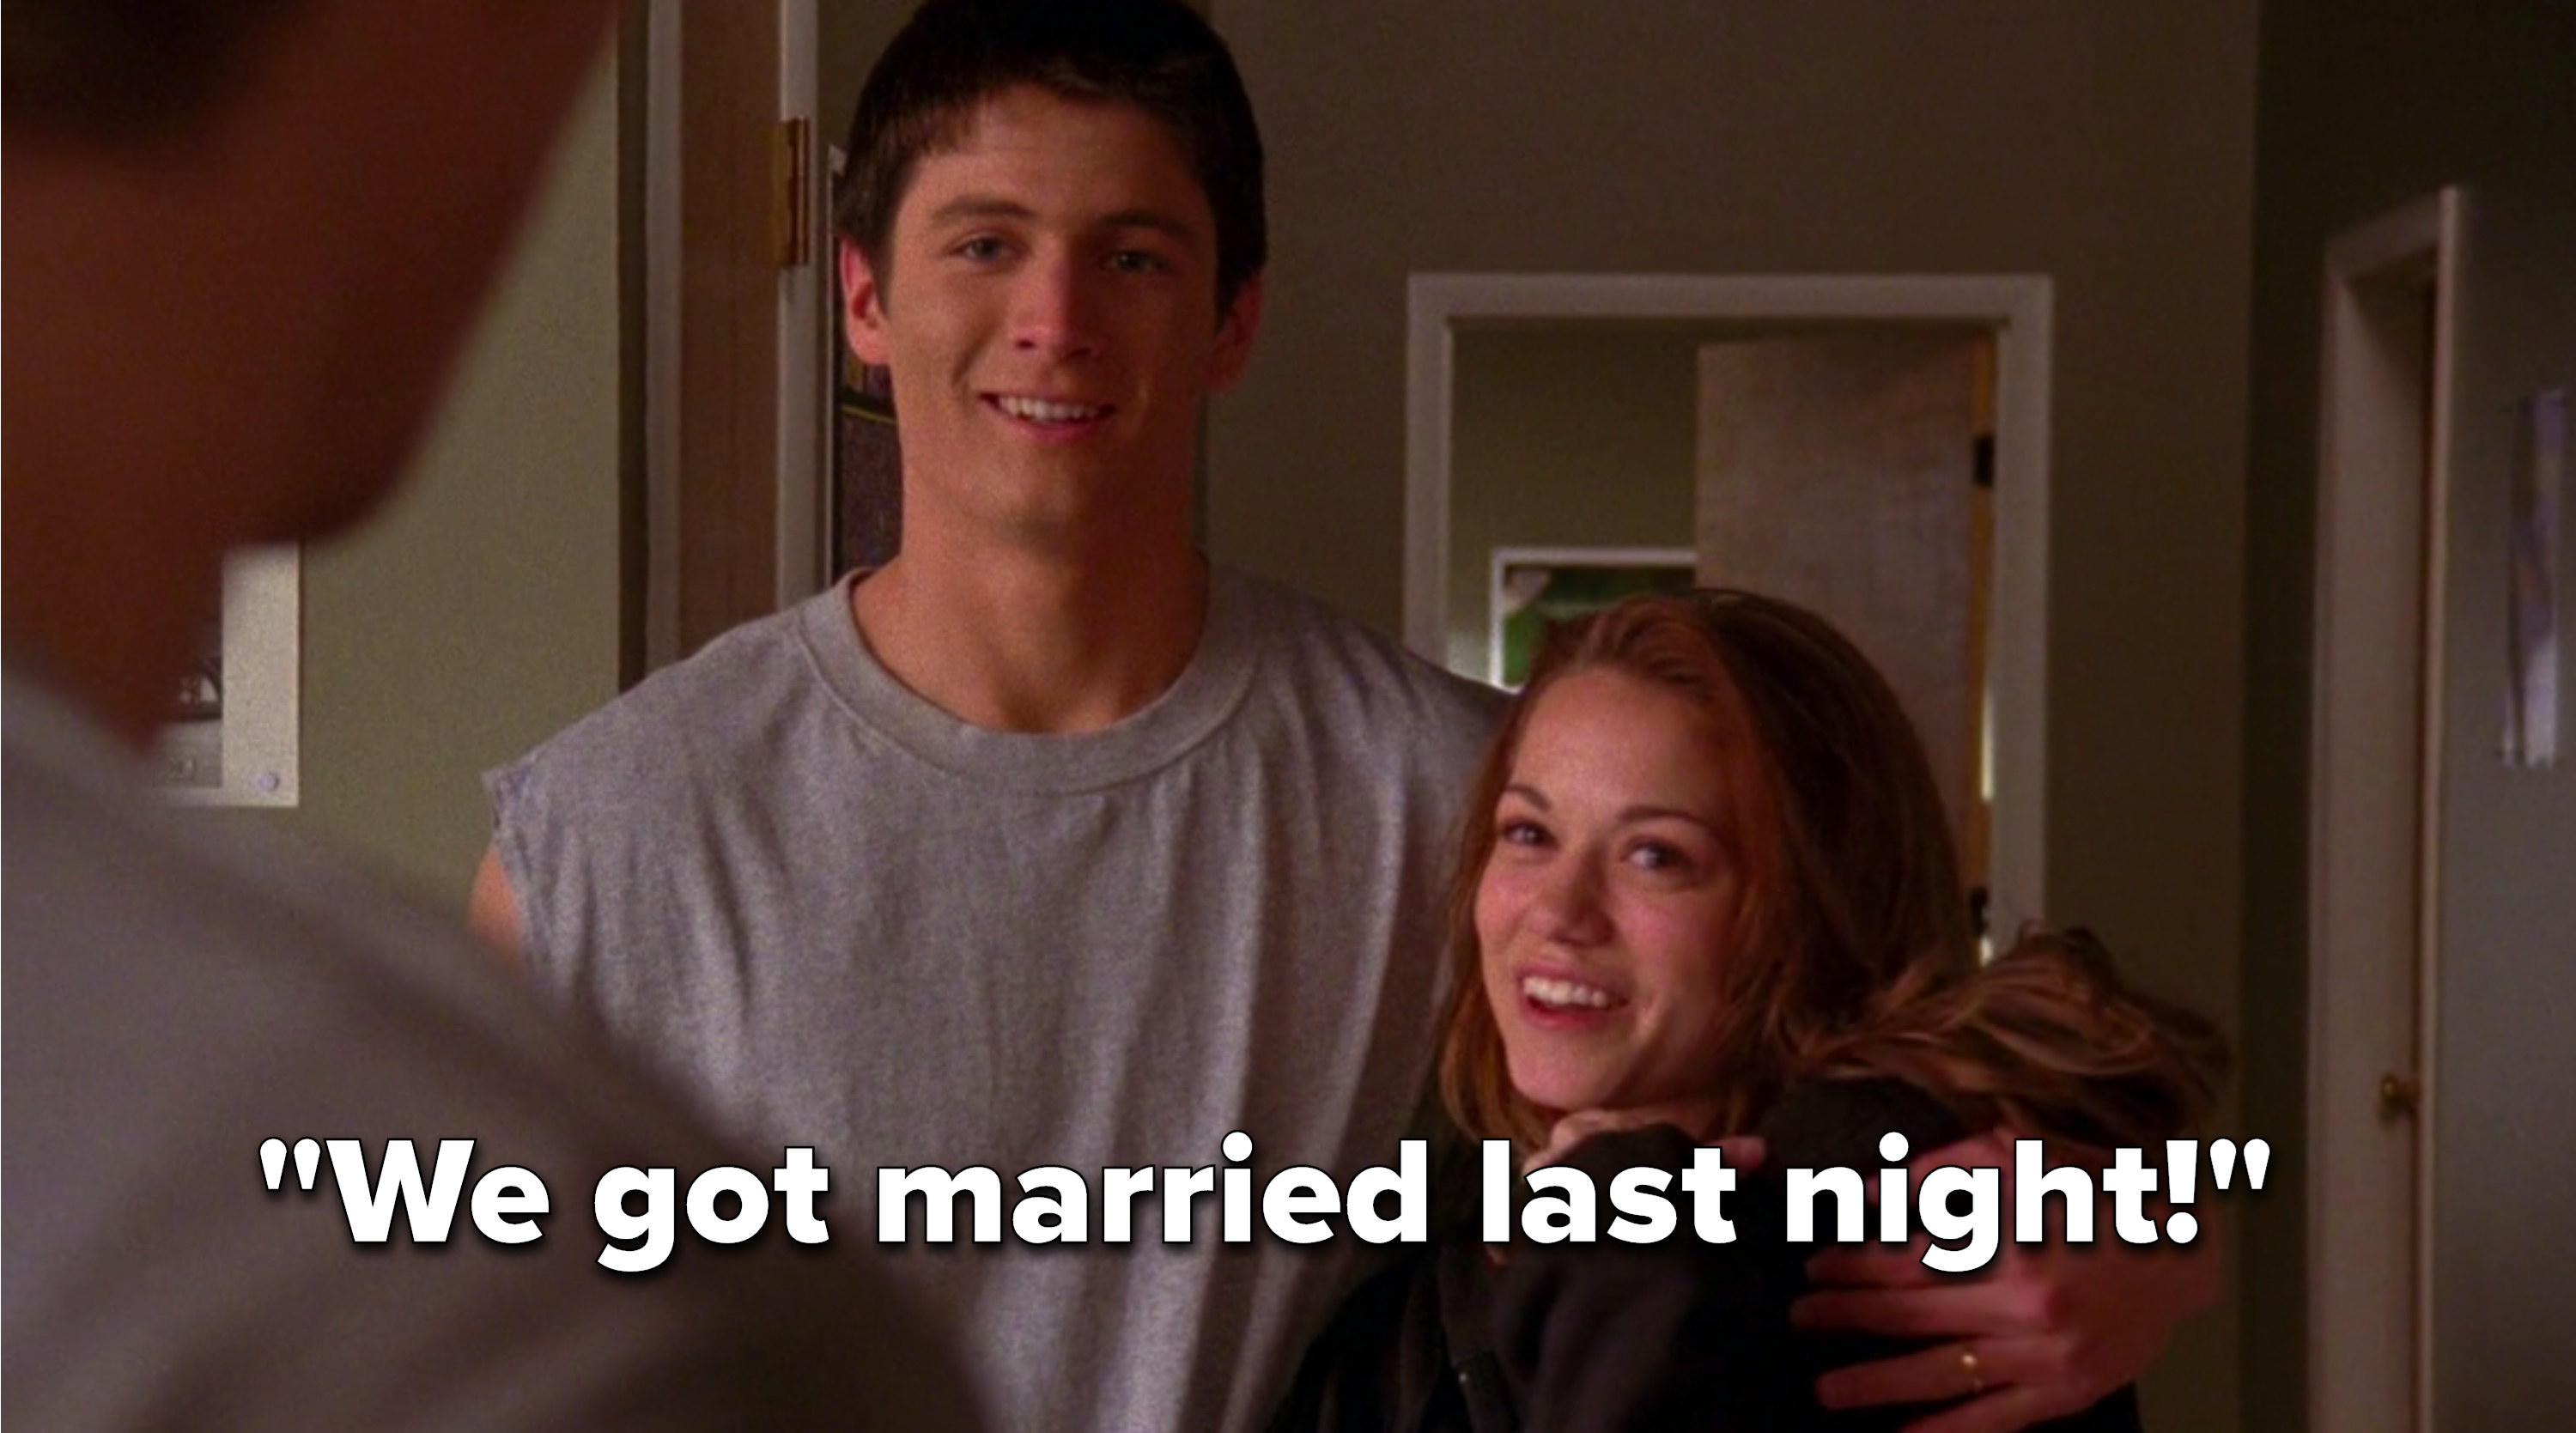 Haley: &quot;We got married last night!&quot;